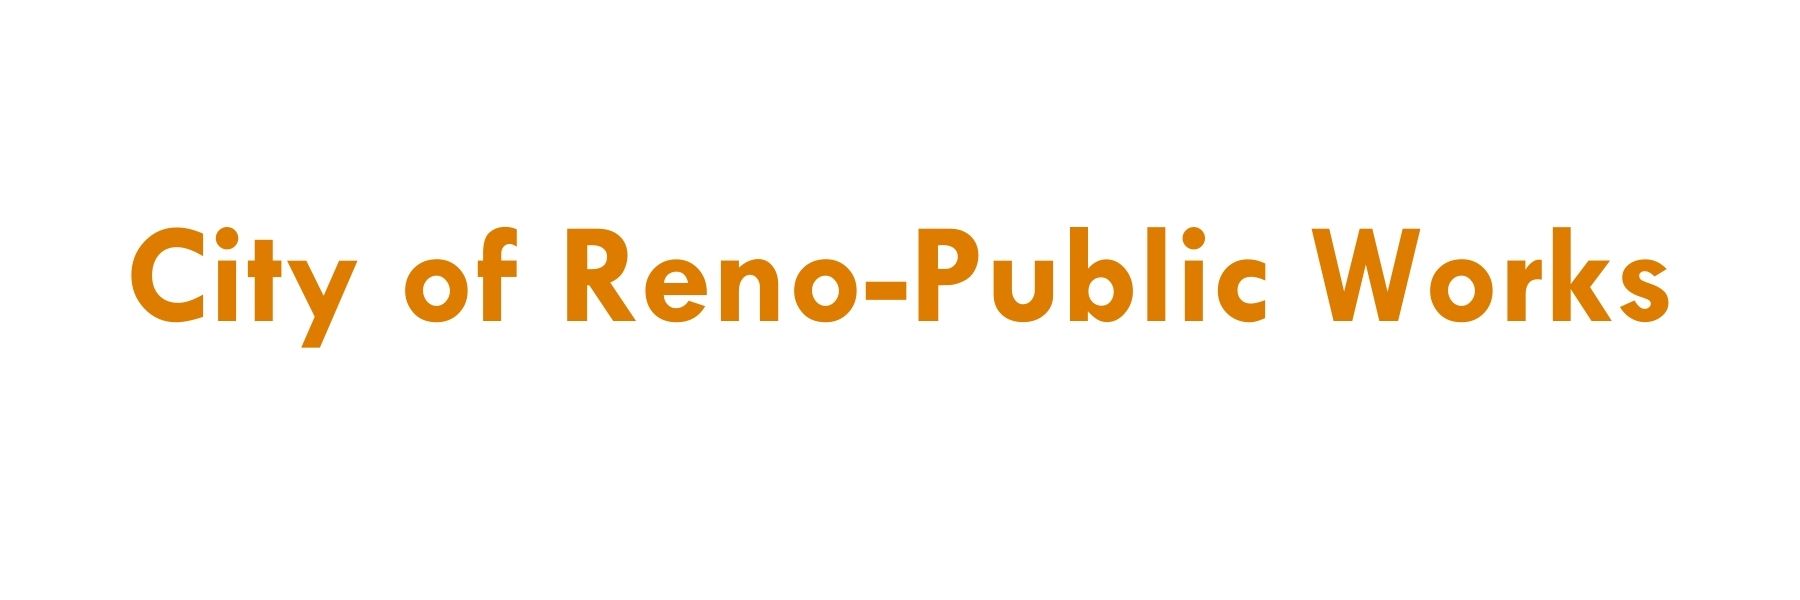 City of Reno - Public Works